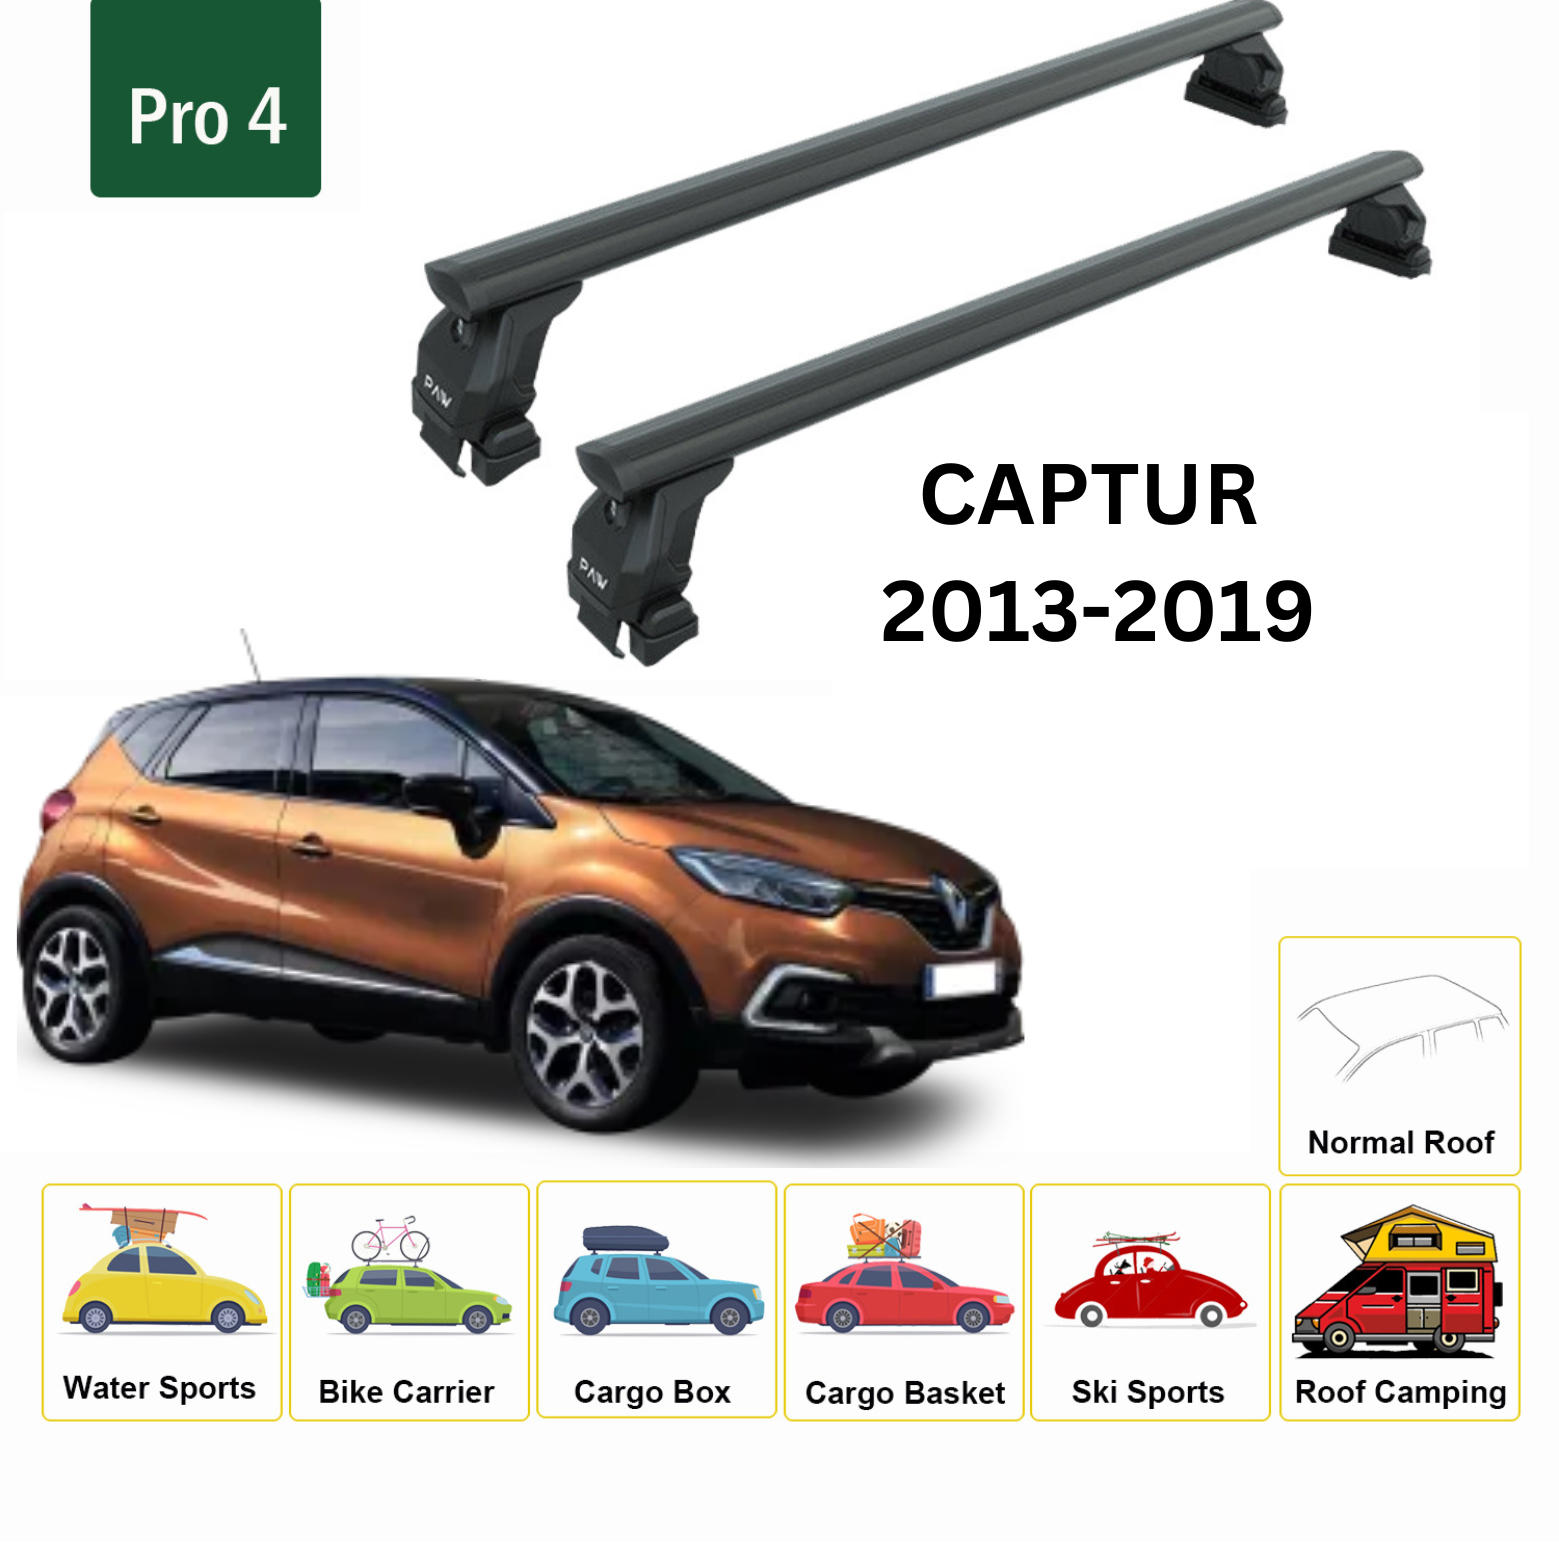 For Renault Captur 2013-2019 Roof Rack System, Aluminium Cross Bar, Metal Bracket, Normal Roof, Black